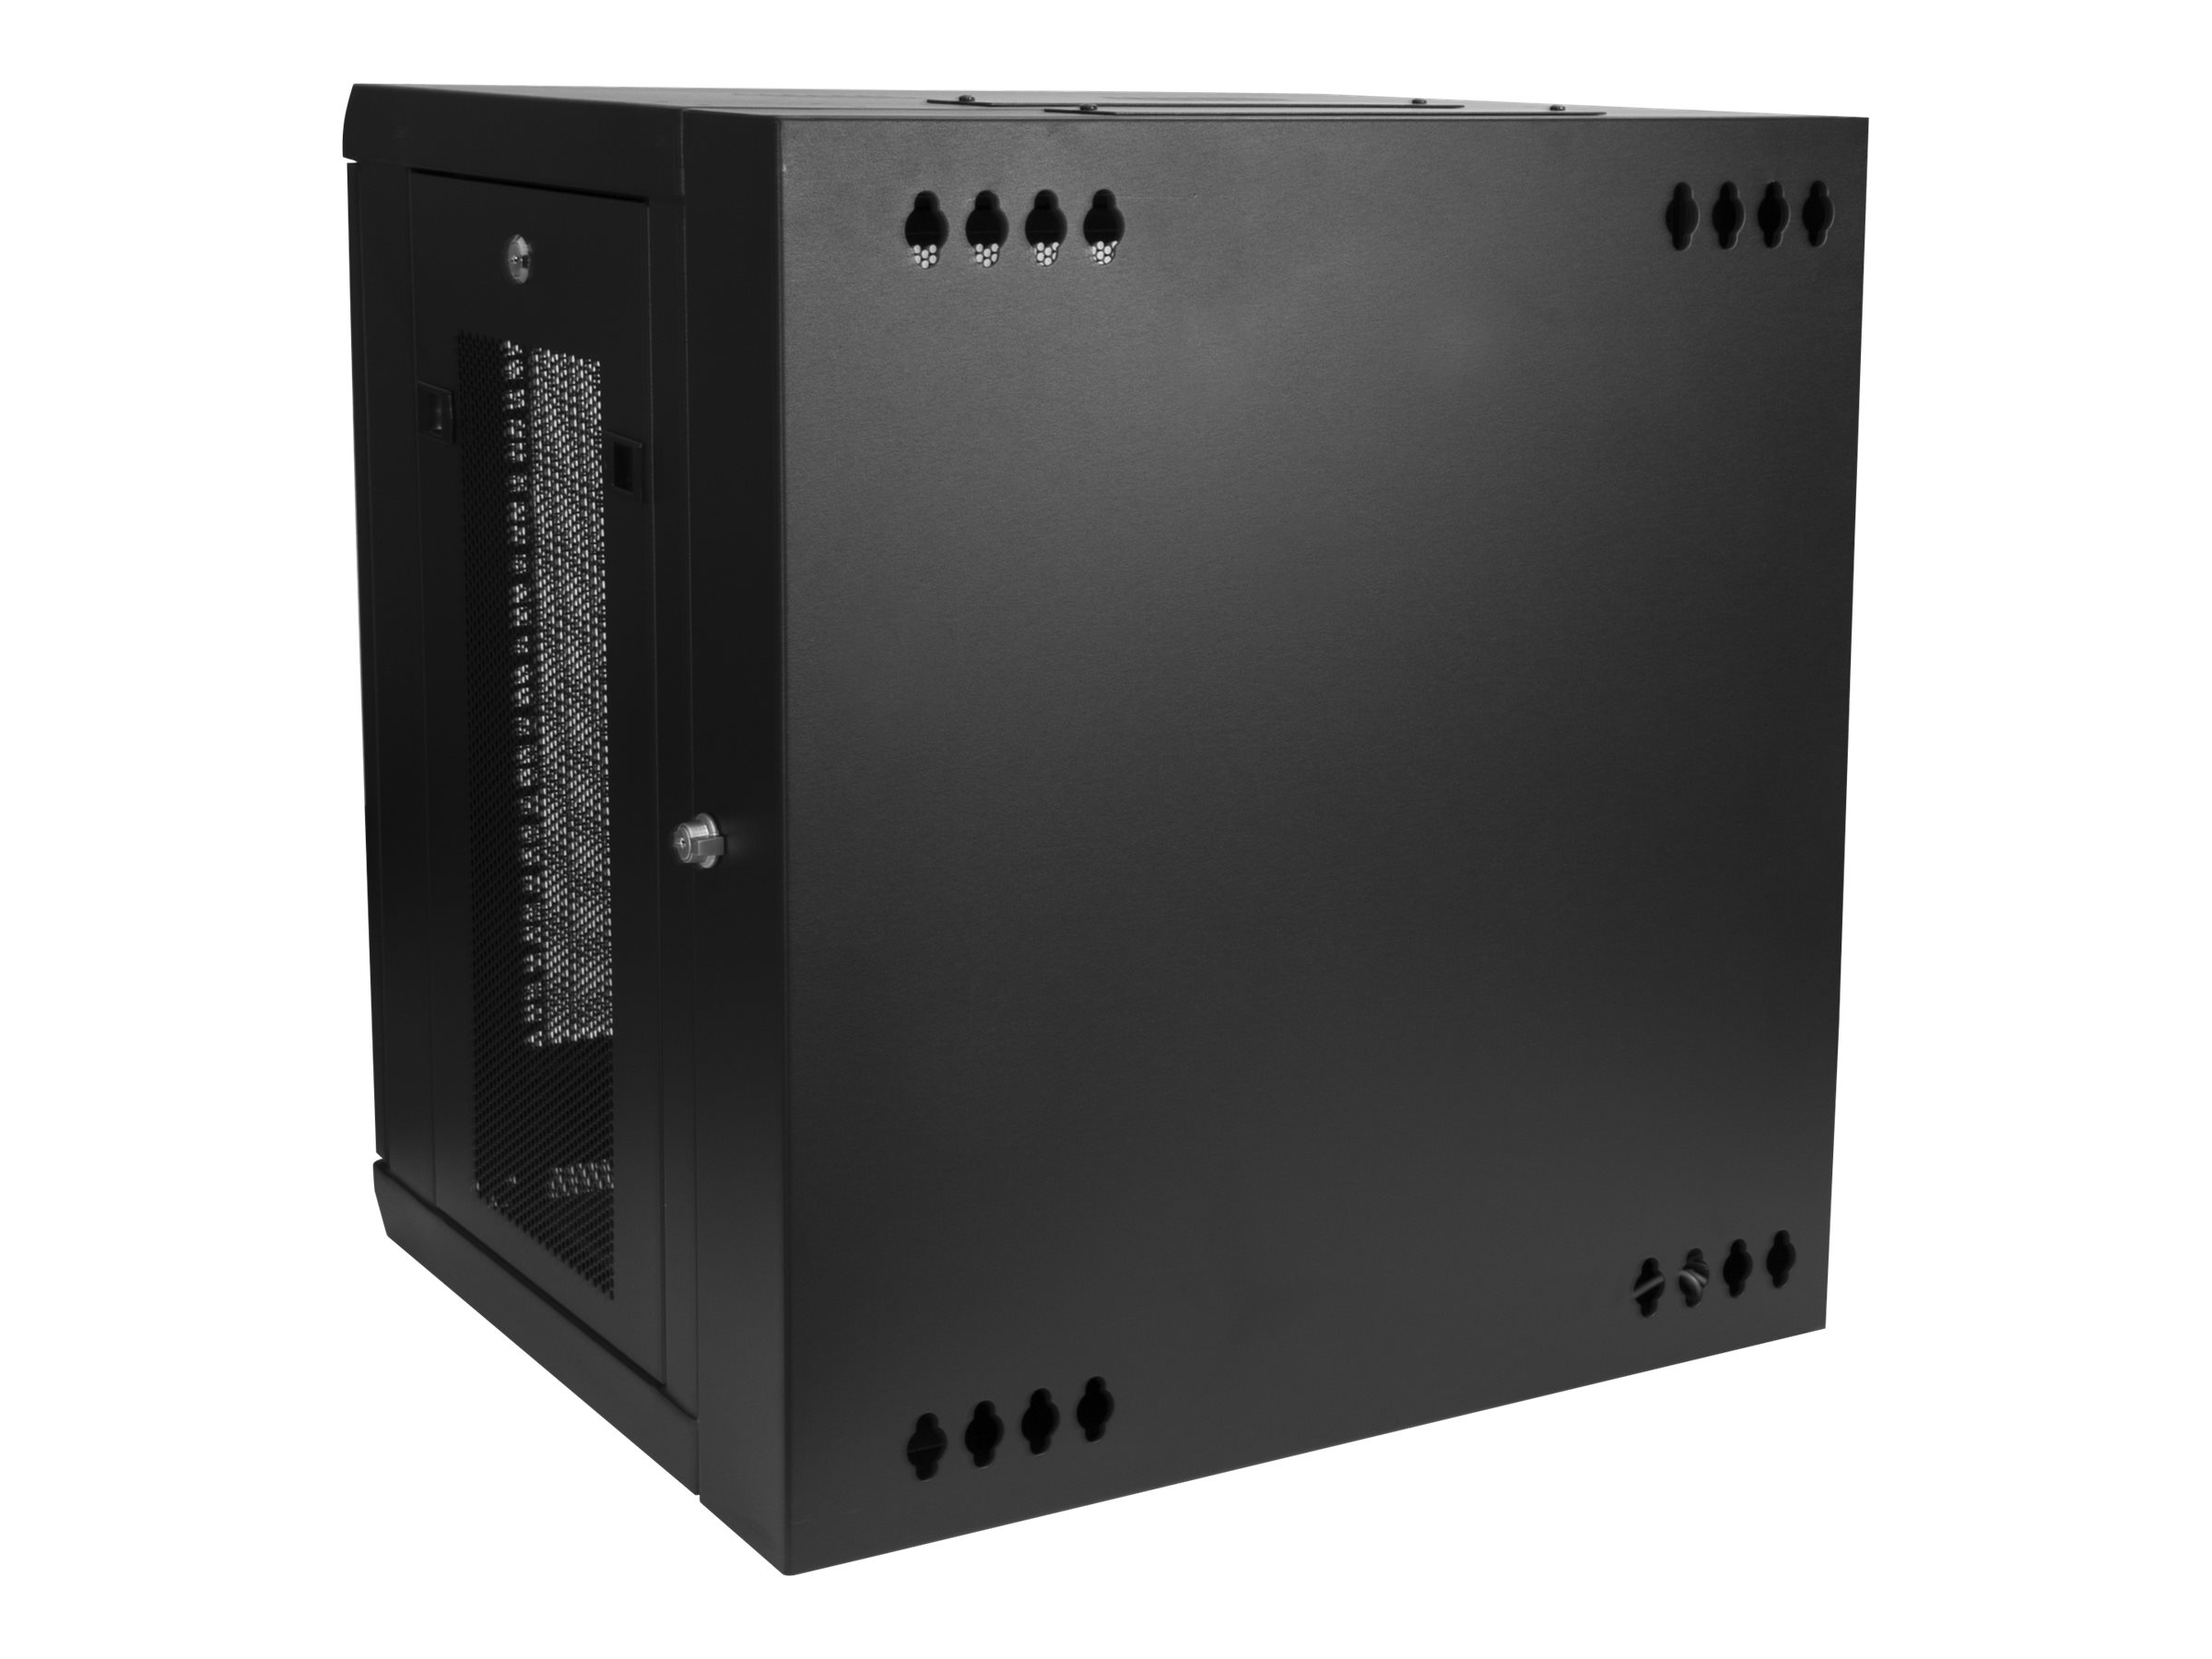 StarTech.com 12HE wandmontage Server Rack - bis zu 43cm tief